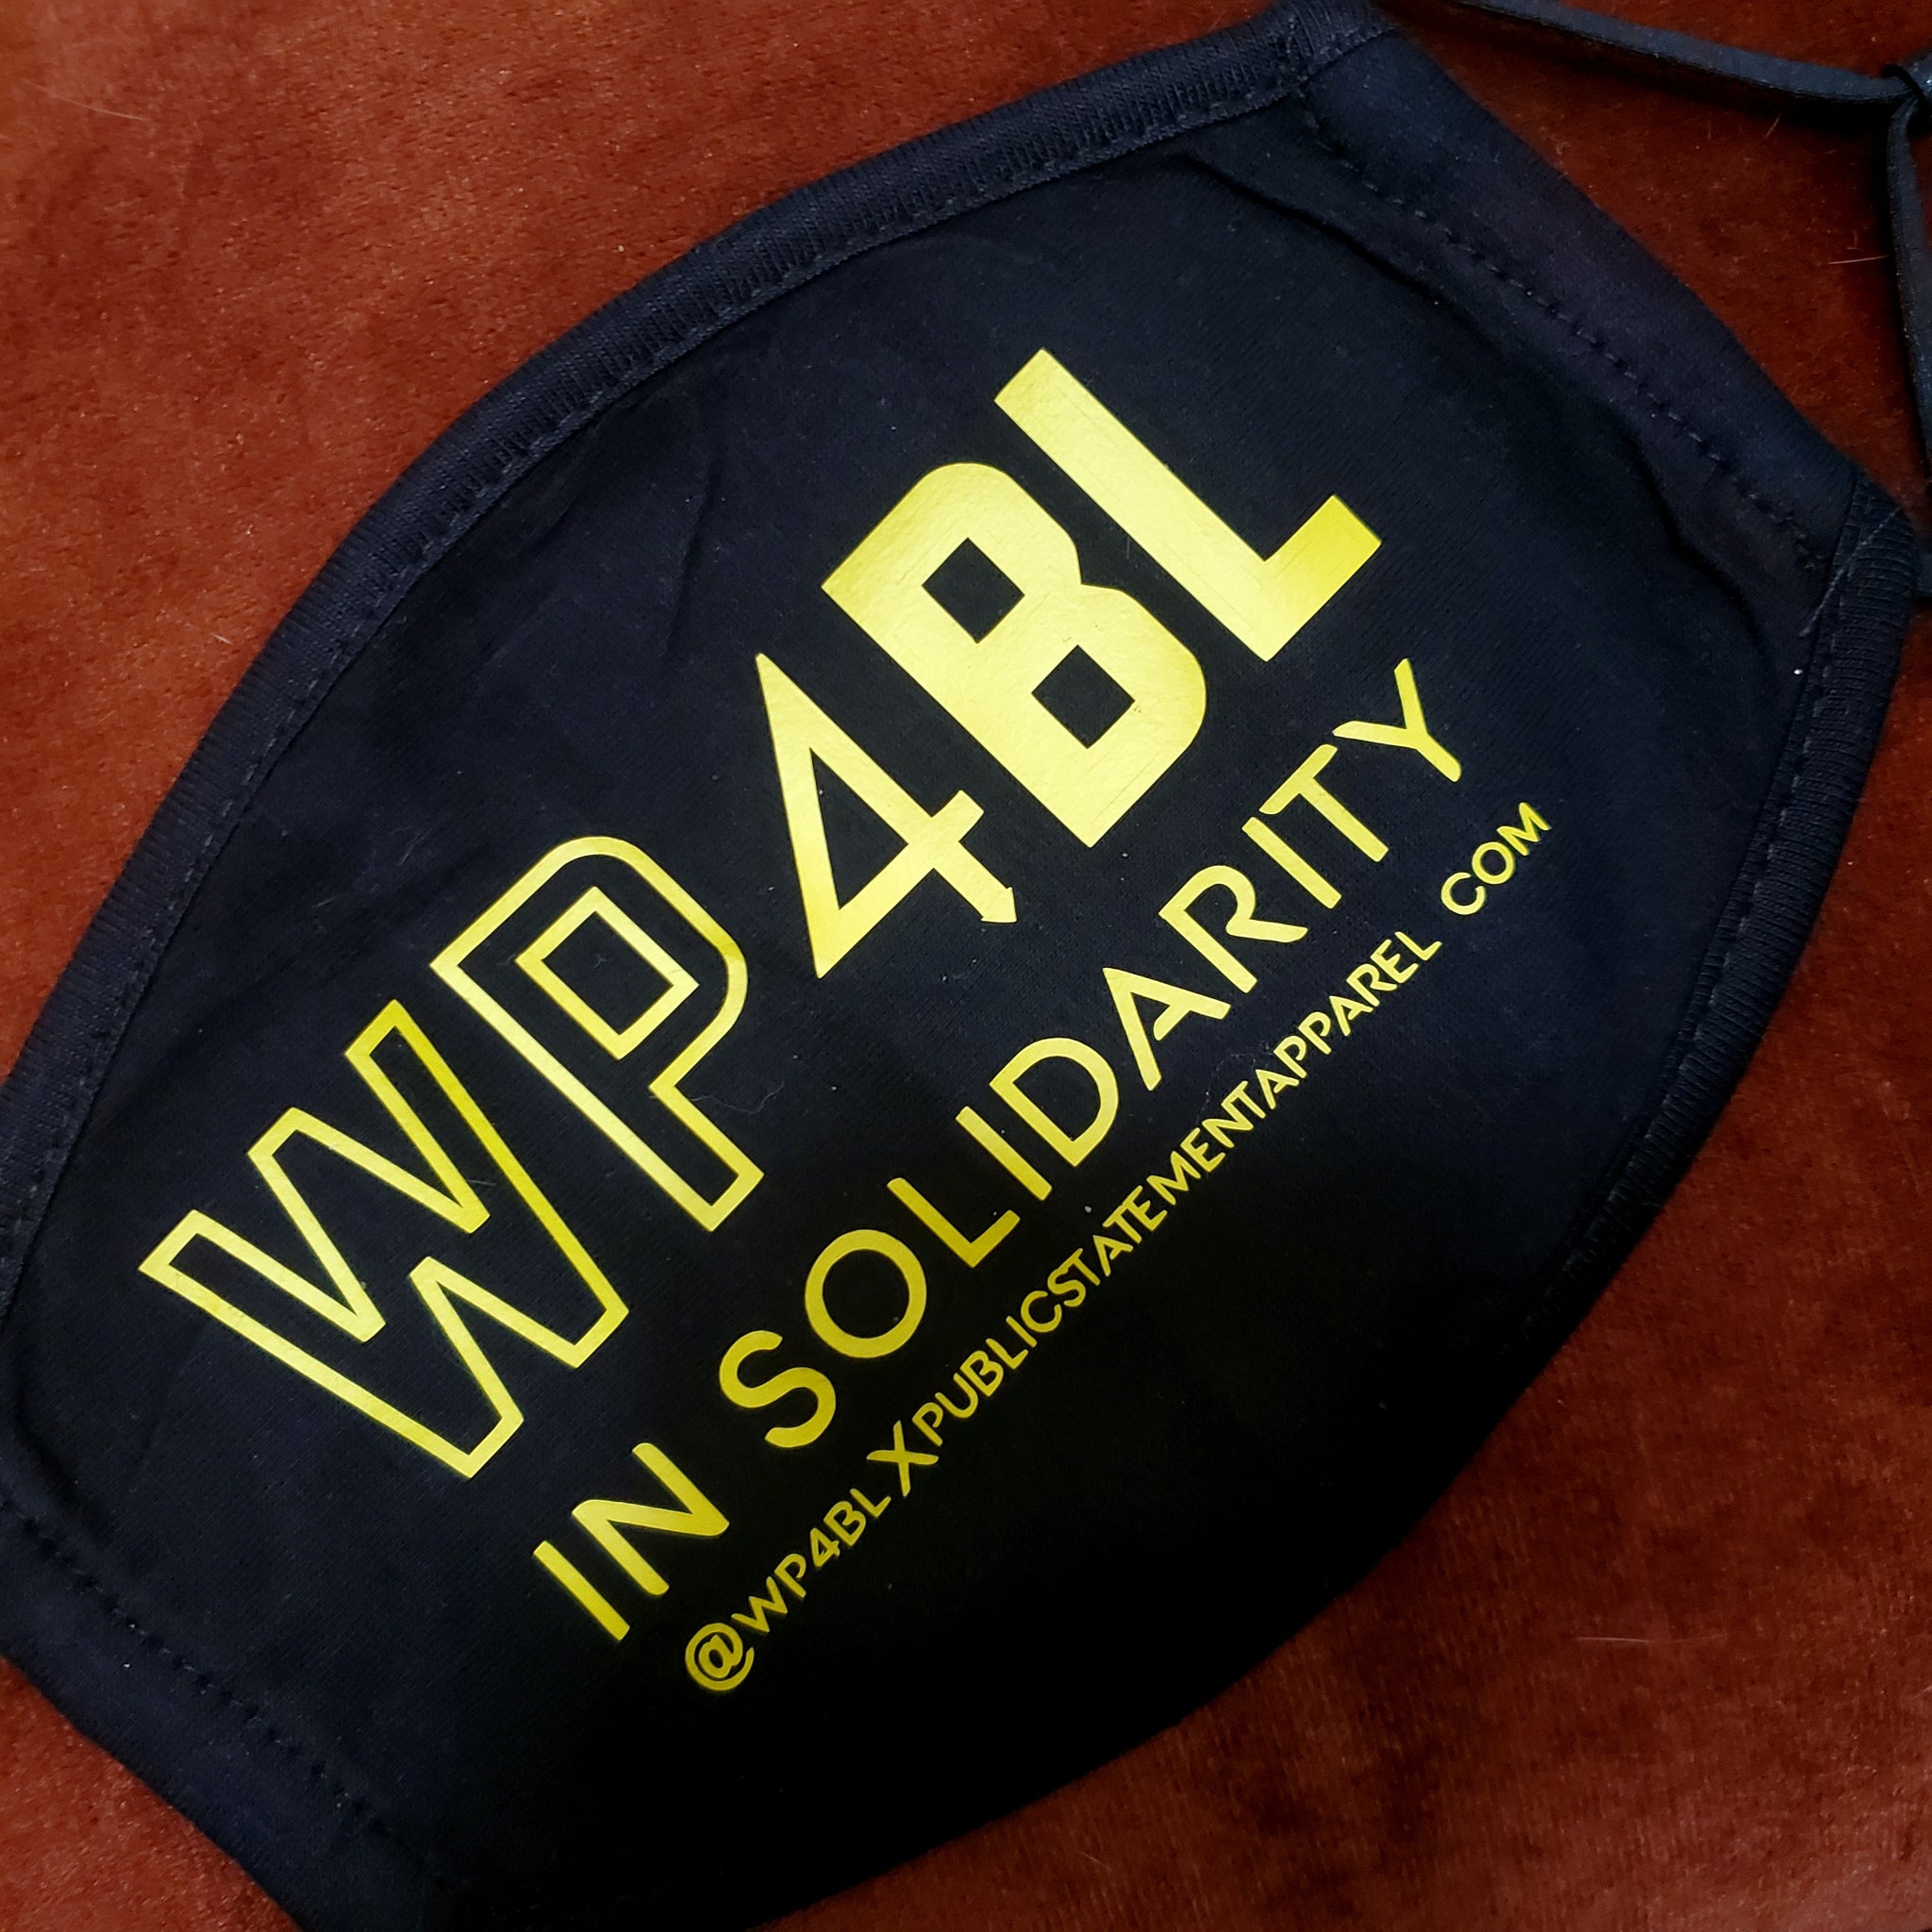 WP4BL X PSA Mask - In Solidarity